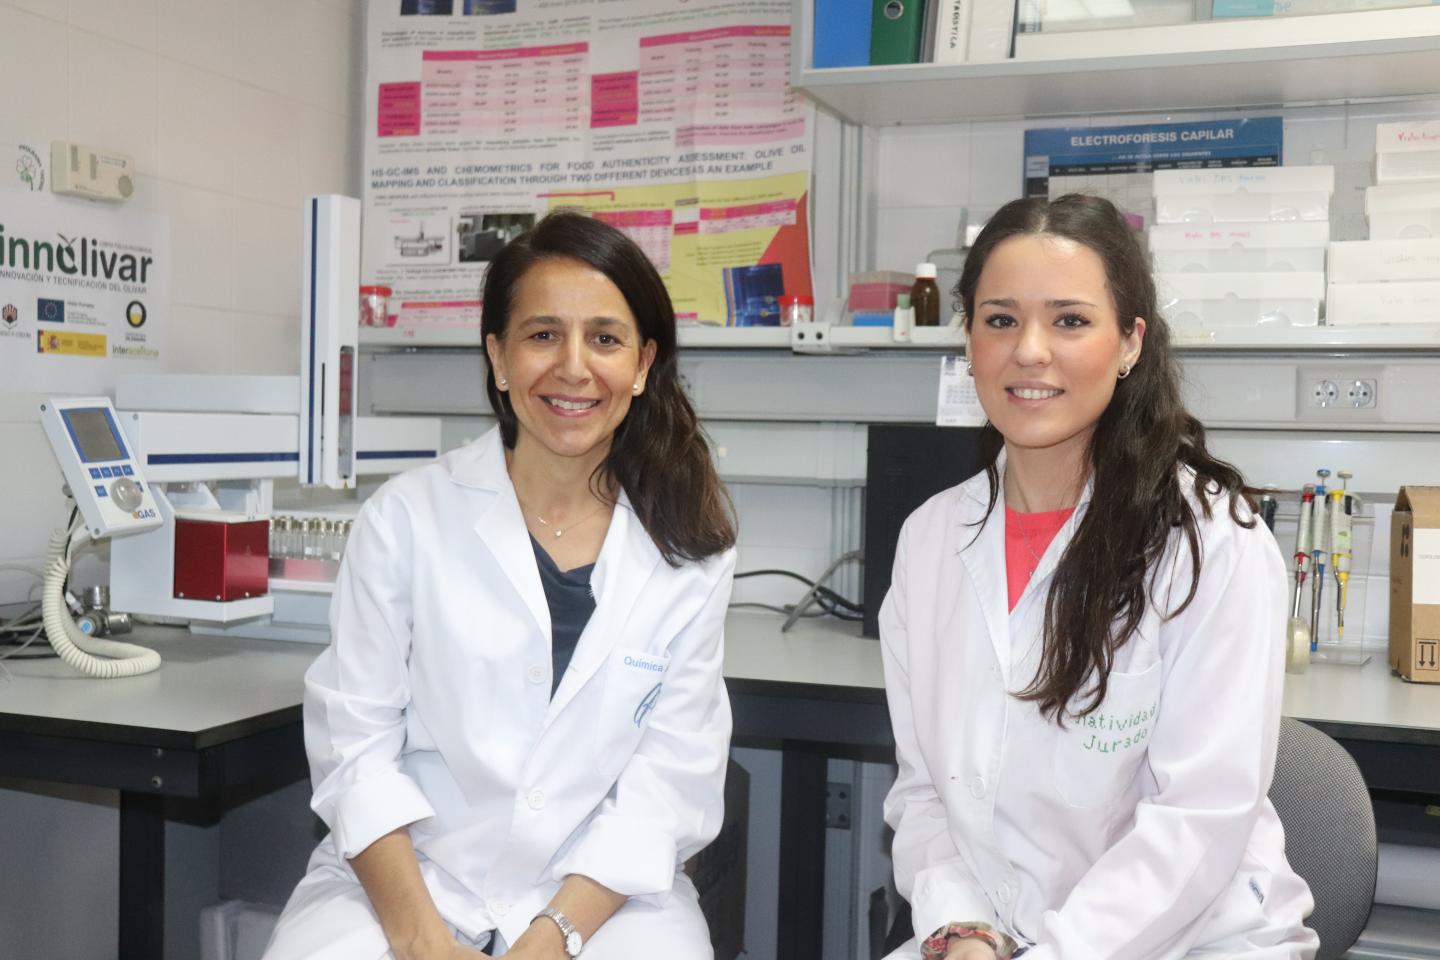 Lourdes Arce and Natividad Jurado, investigators of the Universidad de Cordoba